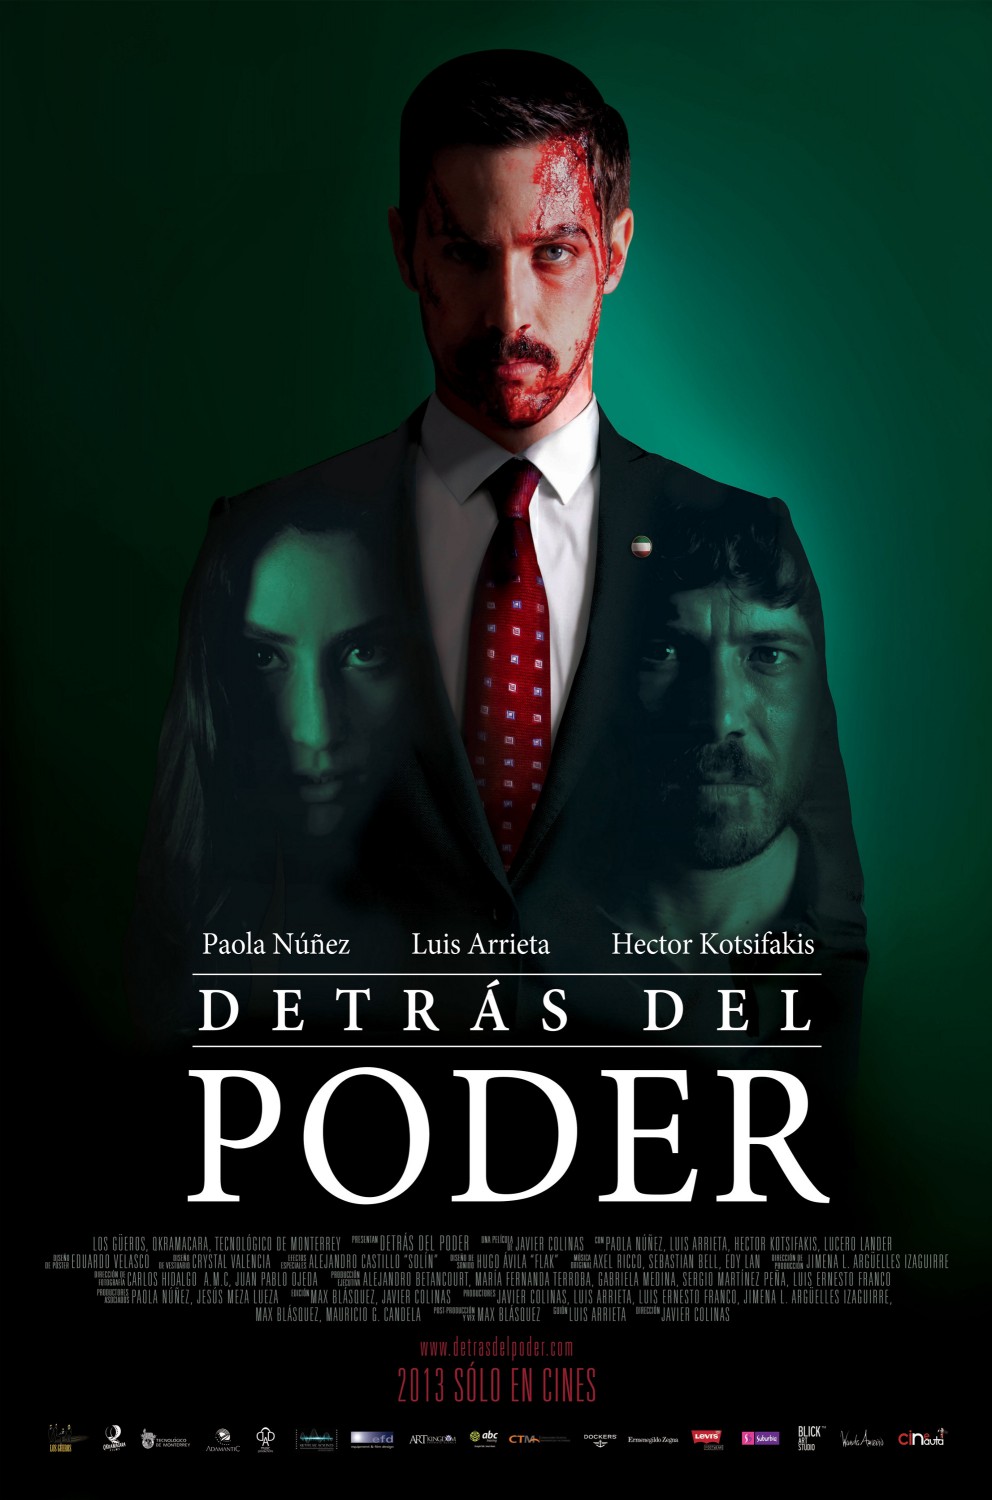 Extra Large Movie Poster Image for Detrás del Poder 